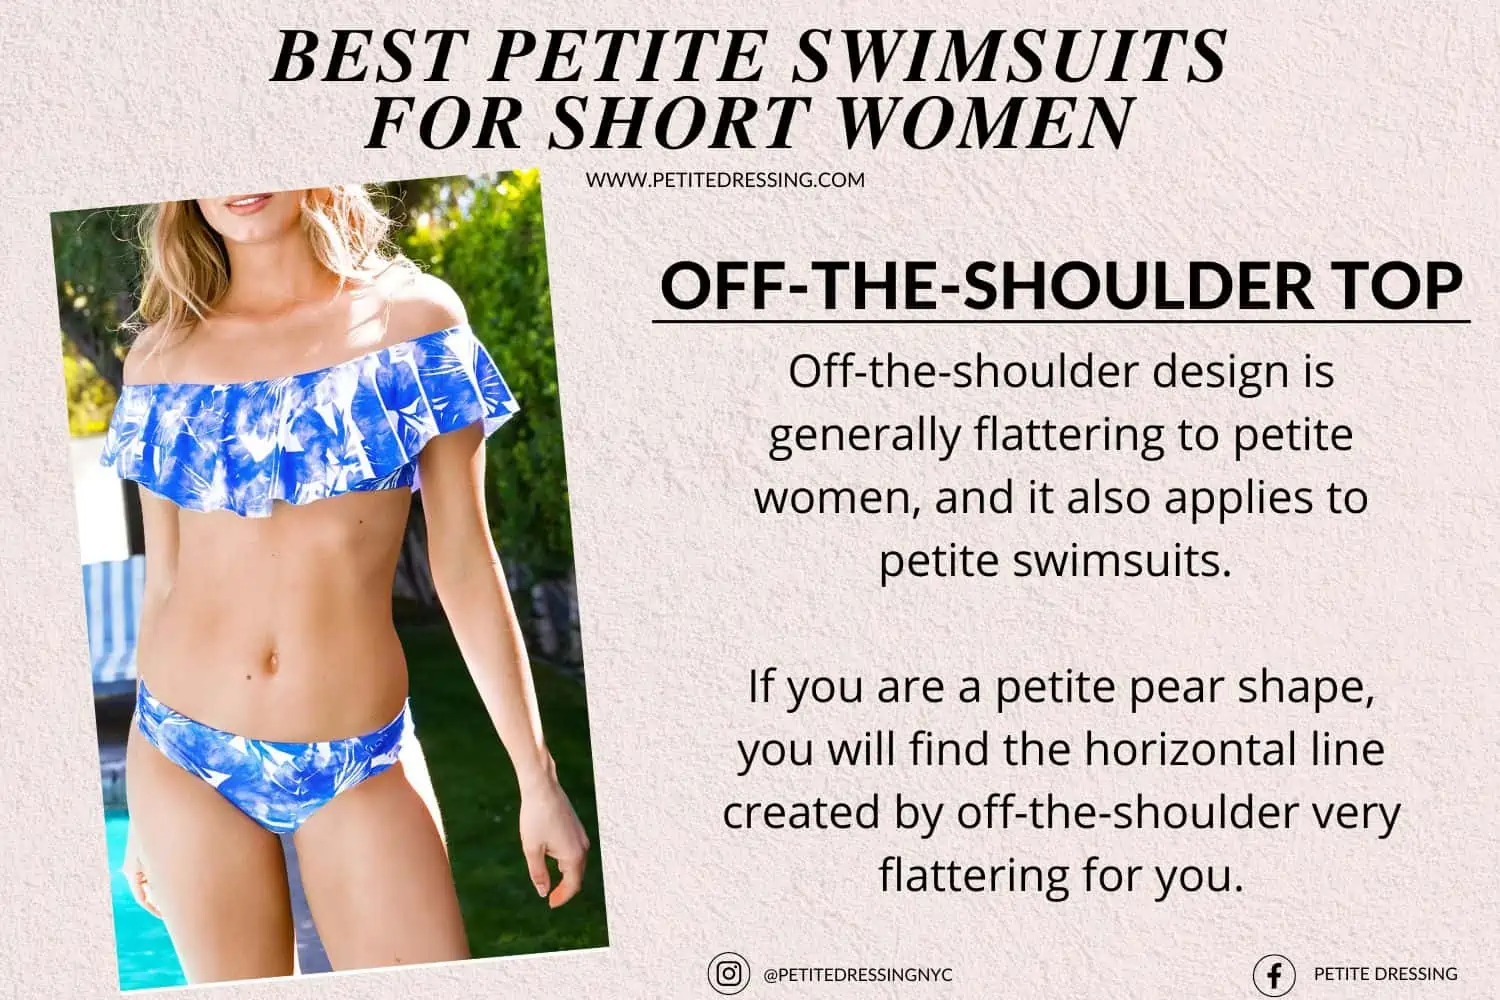 https://blog.petitedressing.com/wp-content/uploads/2019/06/BEST-PETITE-SWIMSUITS-FOR-SHORT-WOMEN2.webp